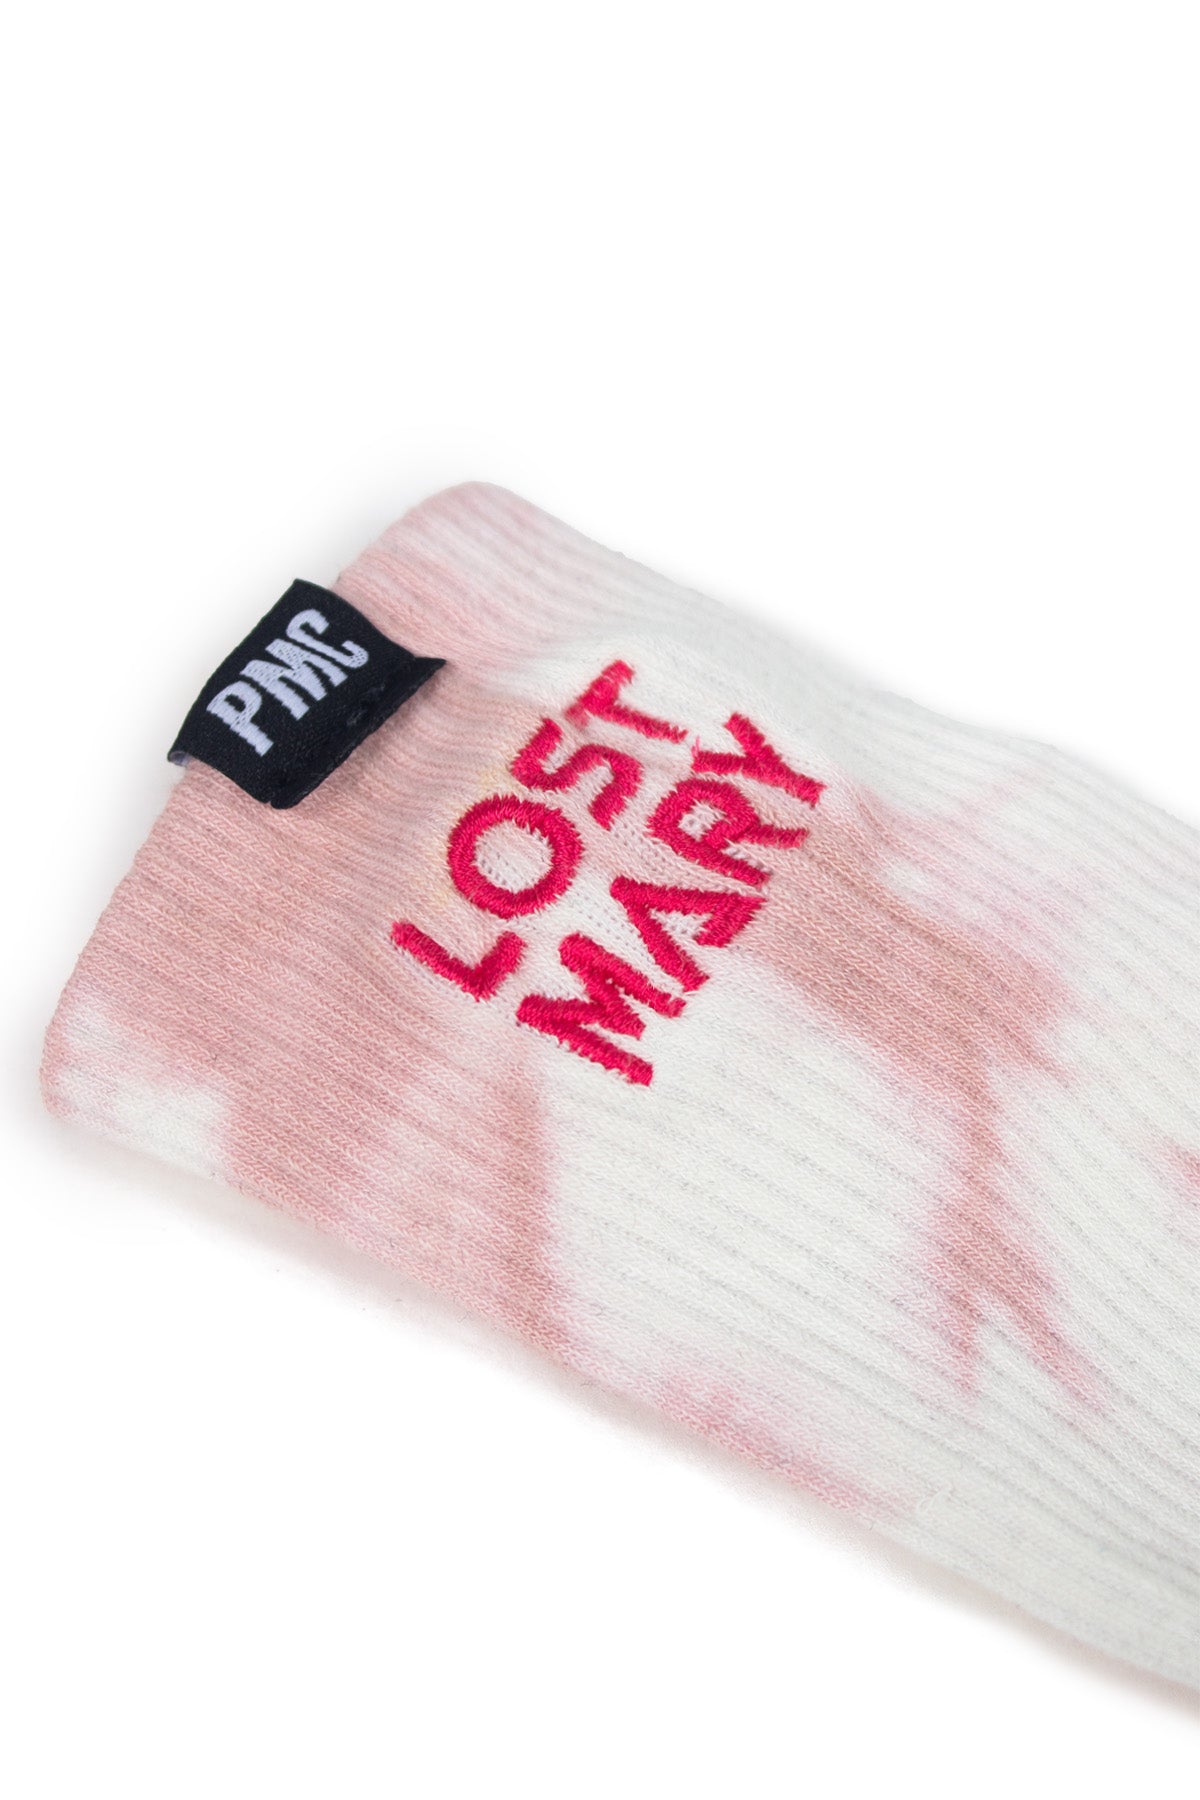 LOST MARY Tie-Dye Socks Pink